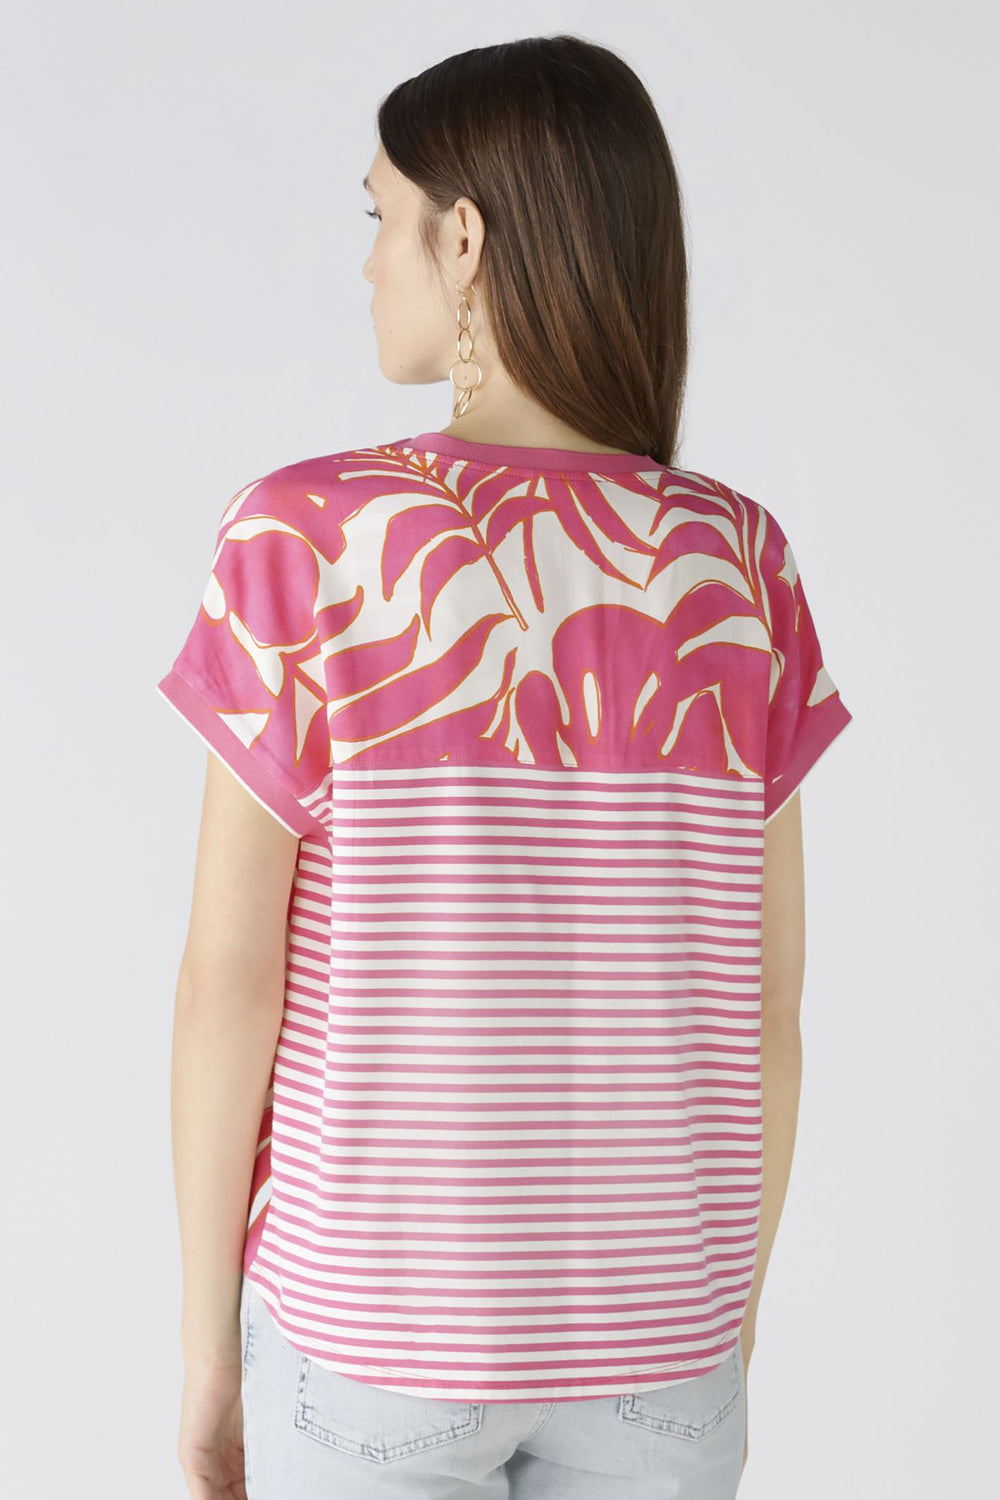 Oui 87505 Pink White Tropical Leaf Print Stripe Back Top - Dotique